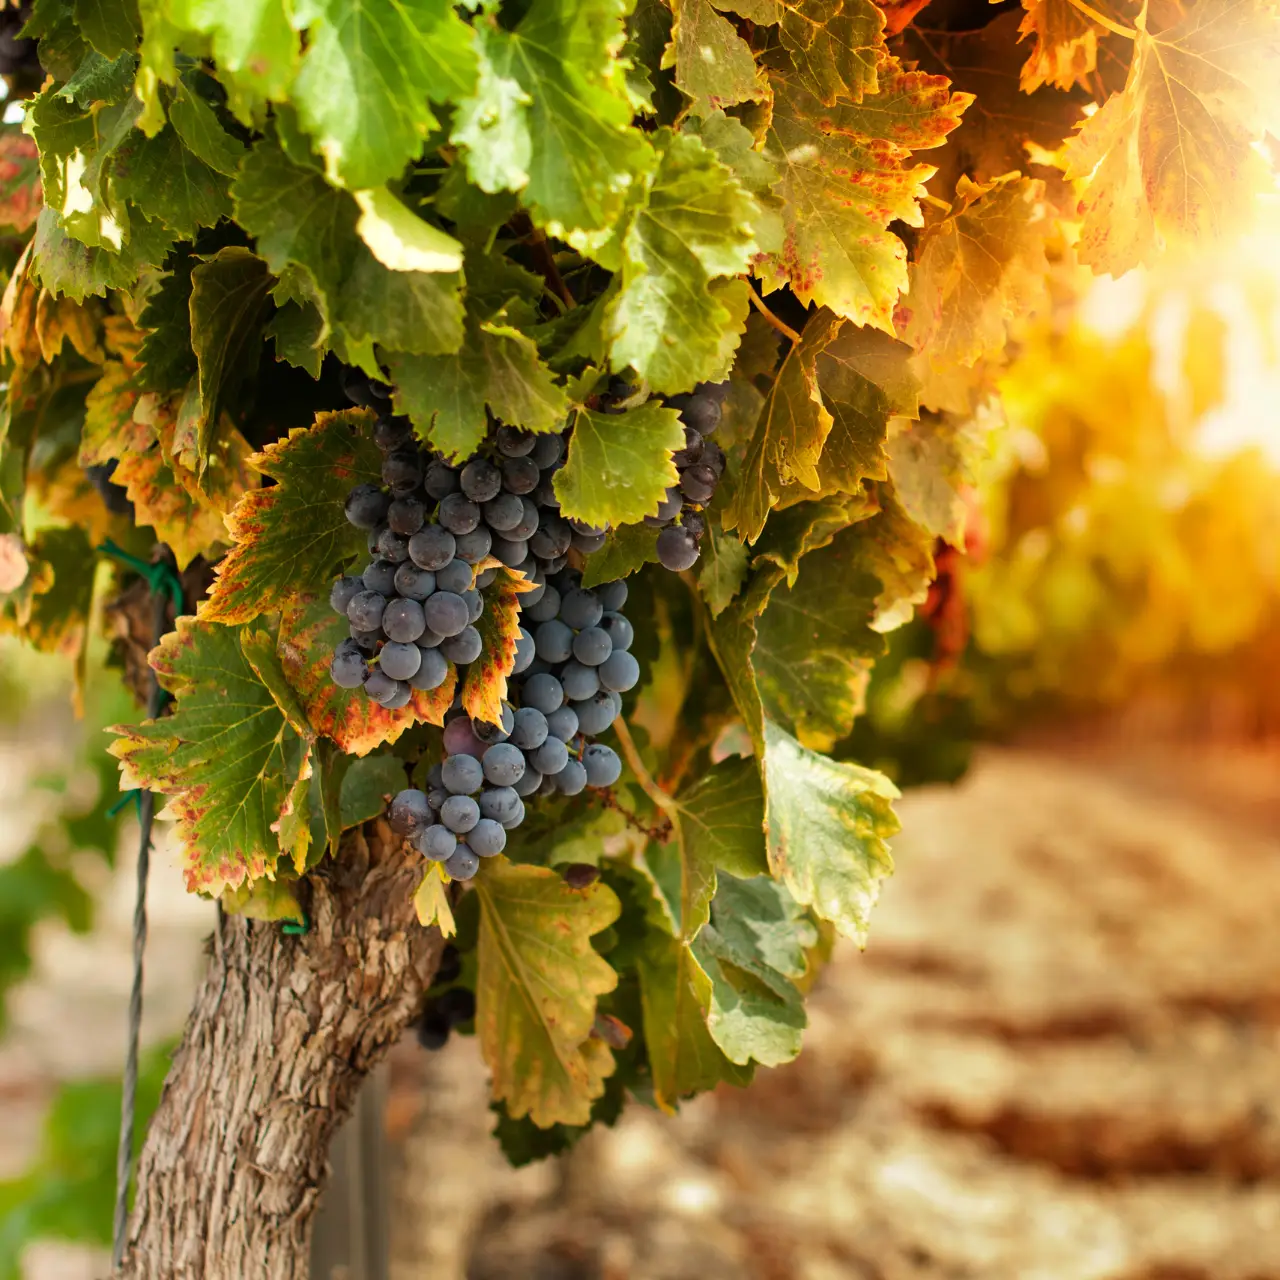 Racimo de uva esperando su recogida durante la época de vendimia en la zona Ribera del Duero